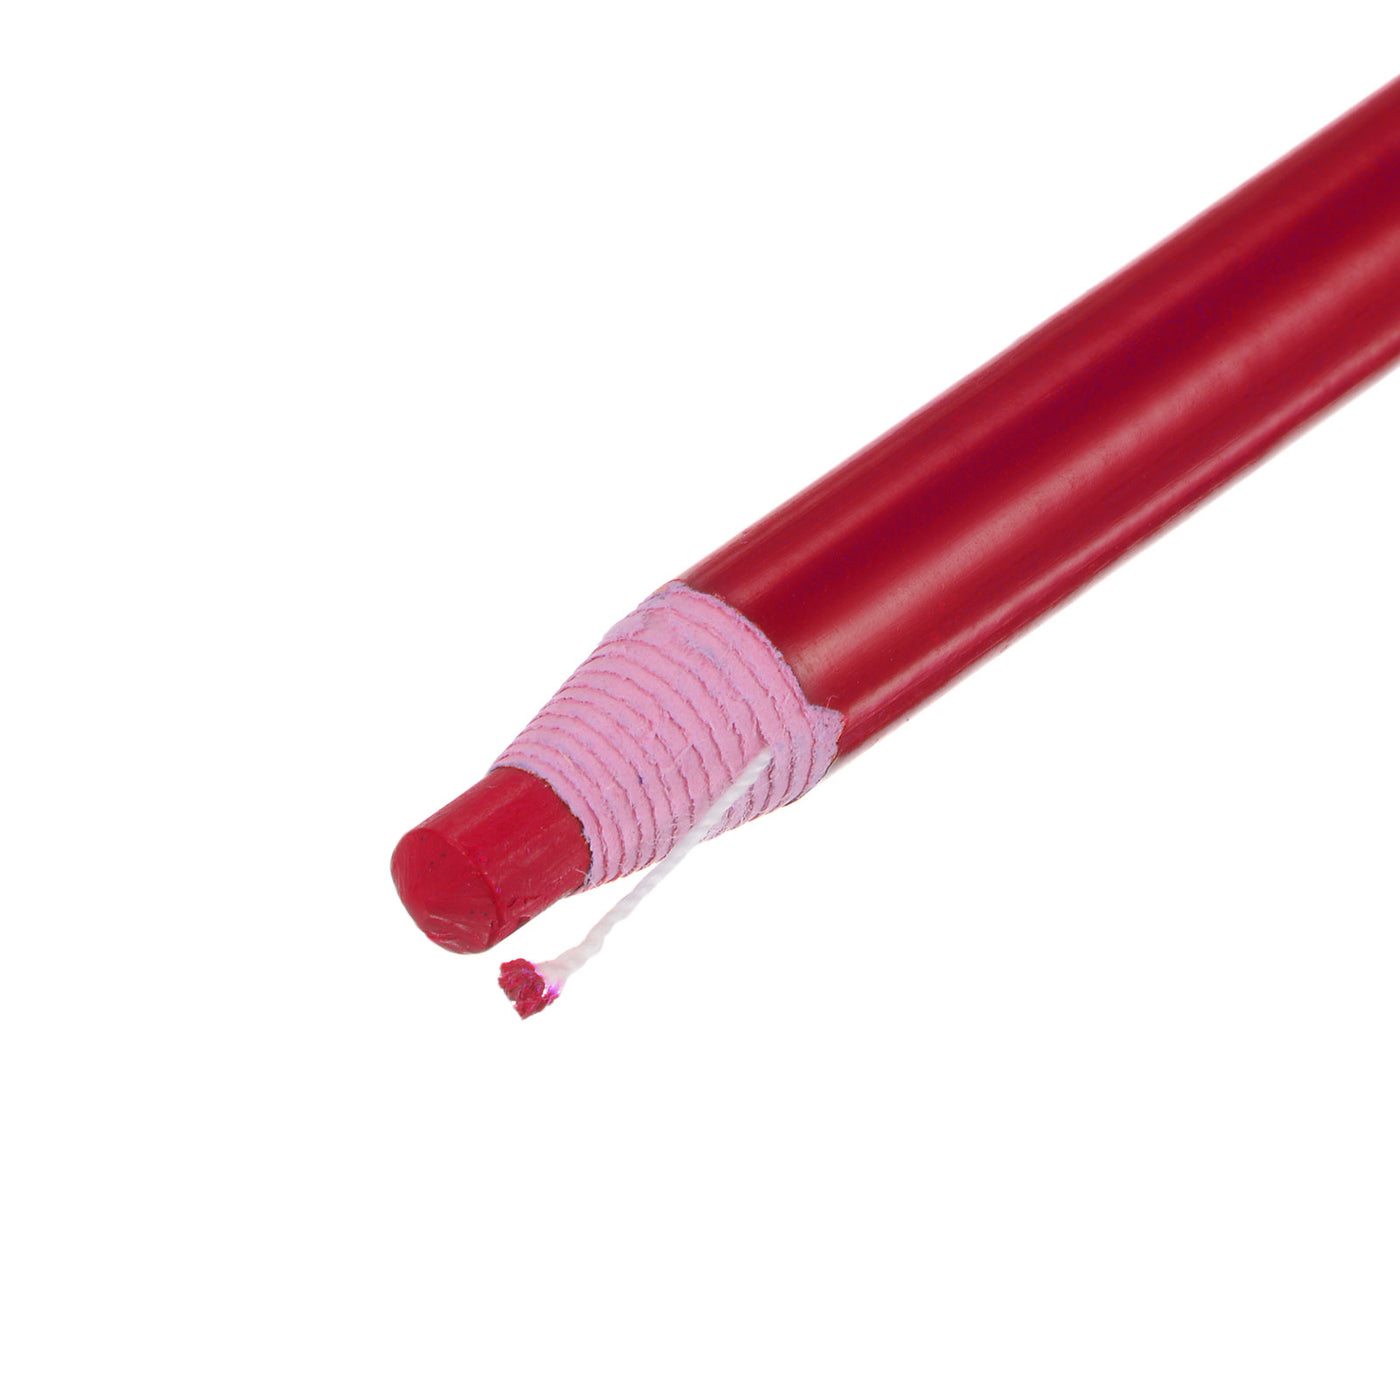 Harfington 3pcs Sewing Fabric Pencils Sewing Mark Chalks Marking Tools, Red